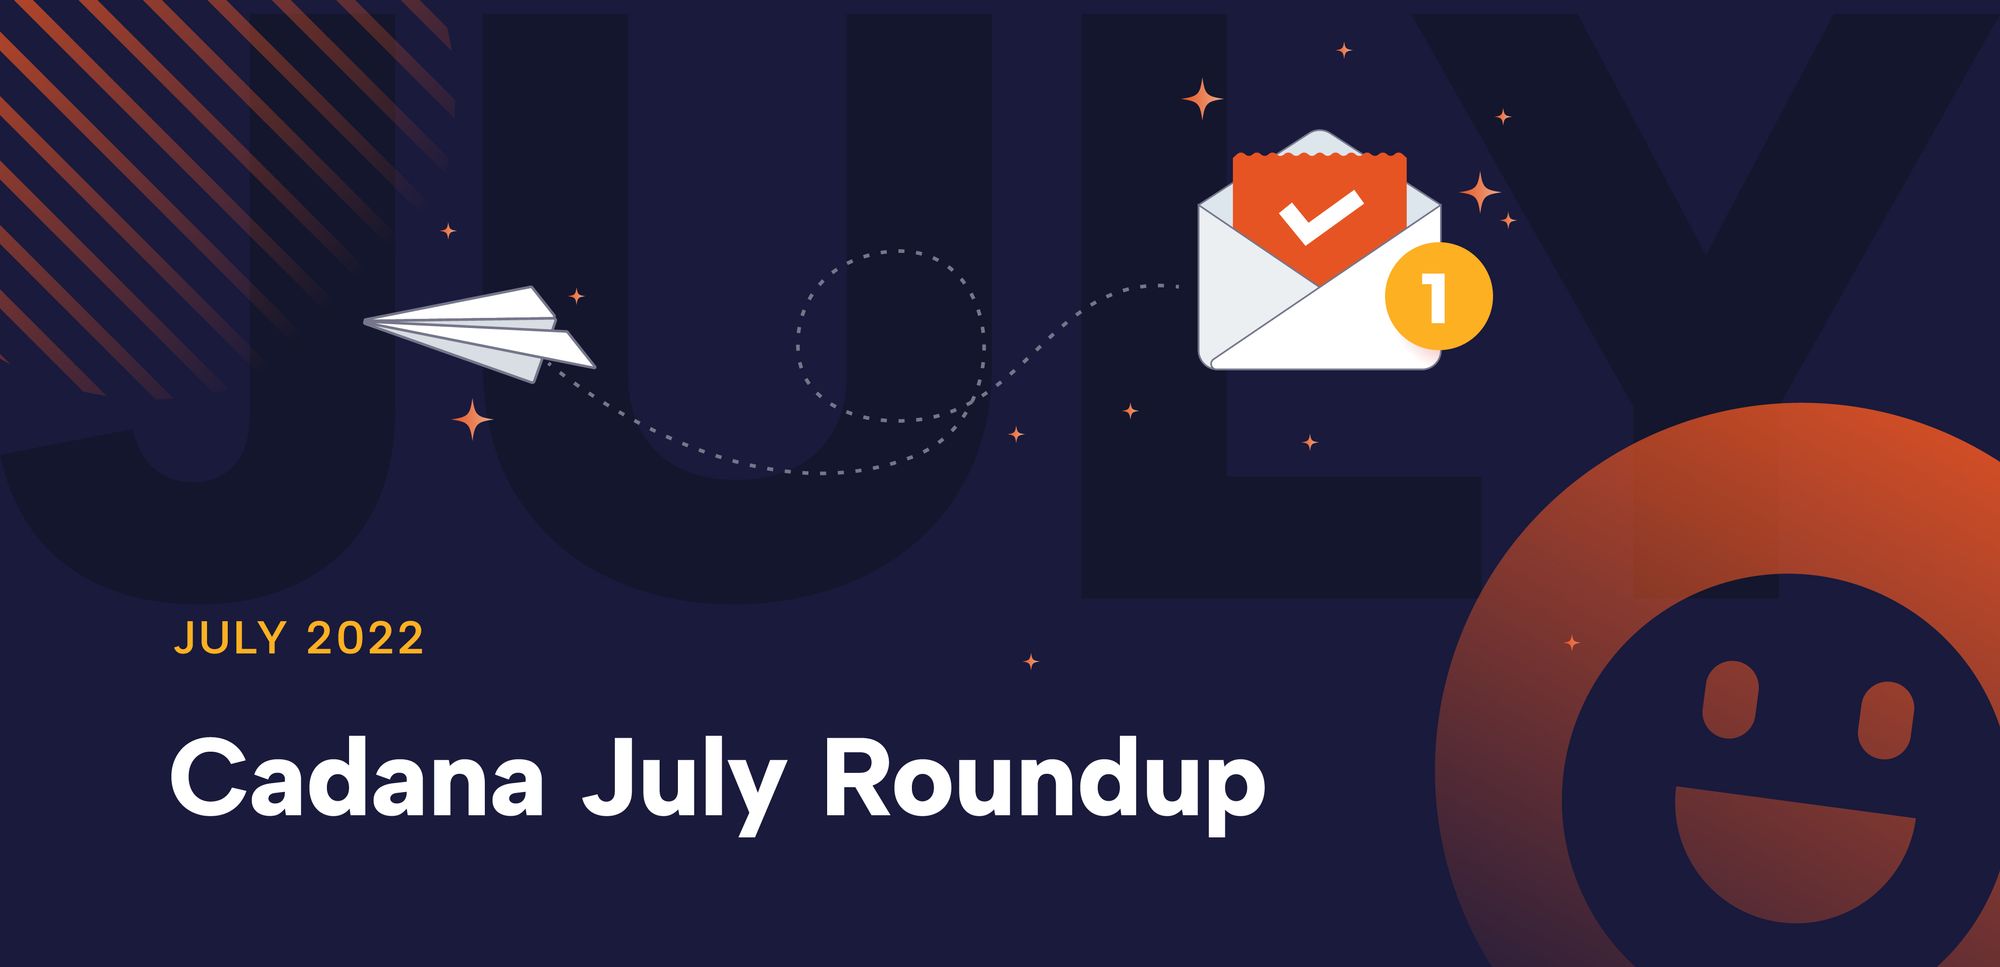 Cadana July Roundup